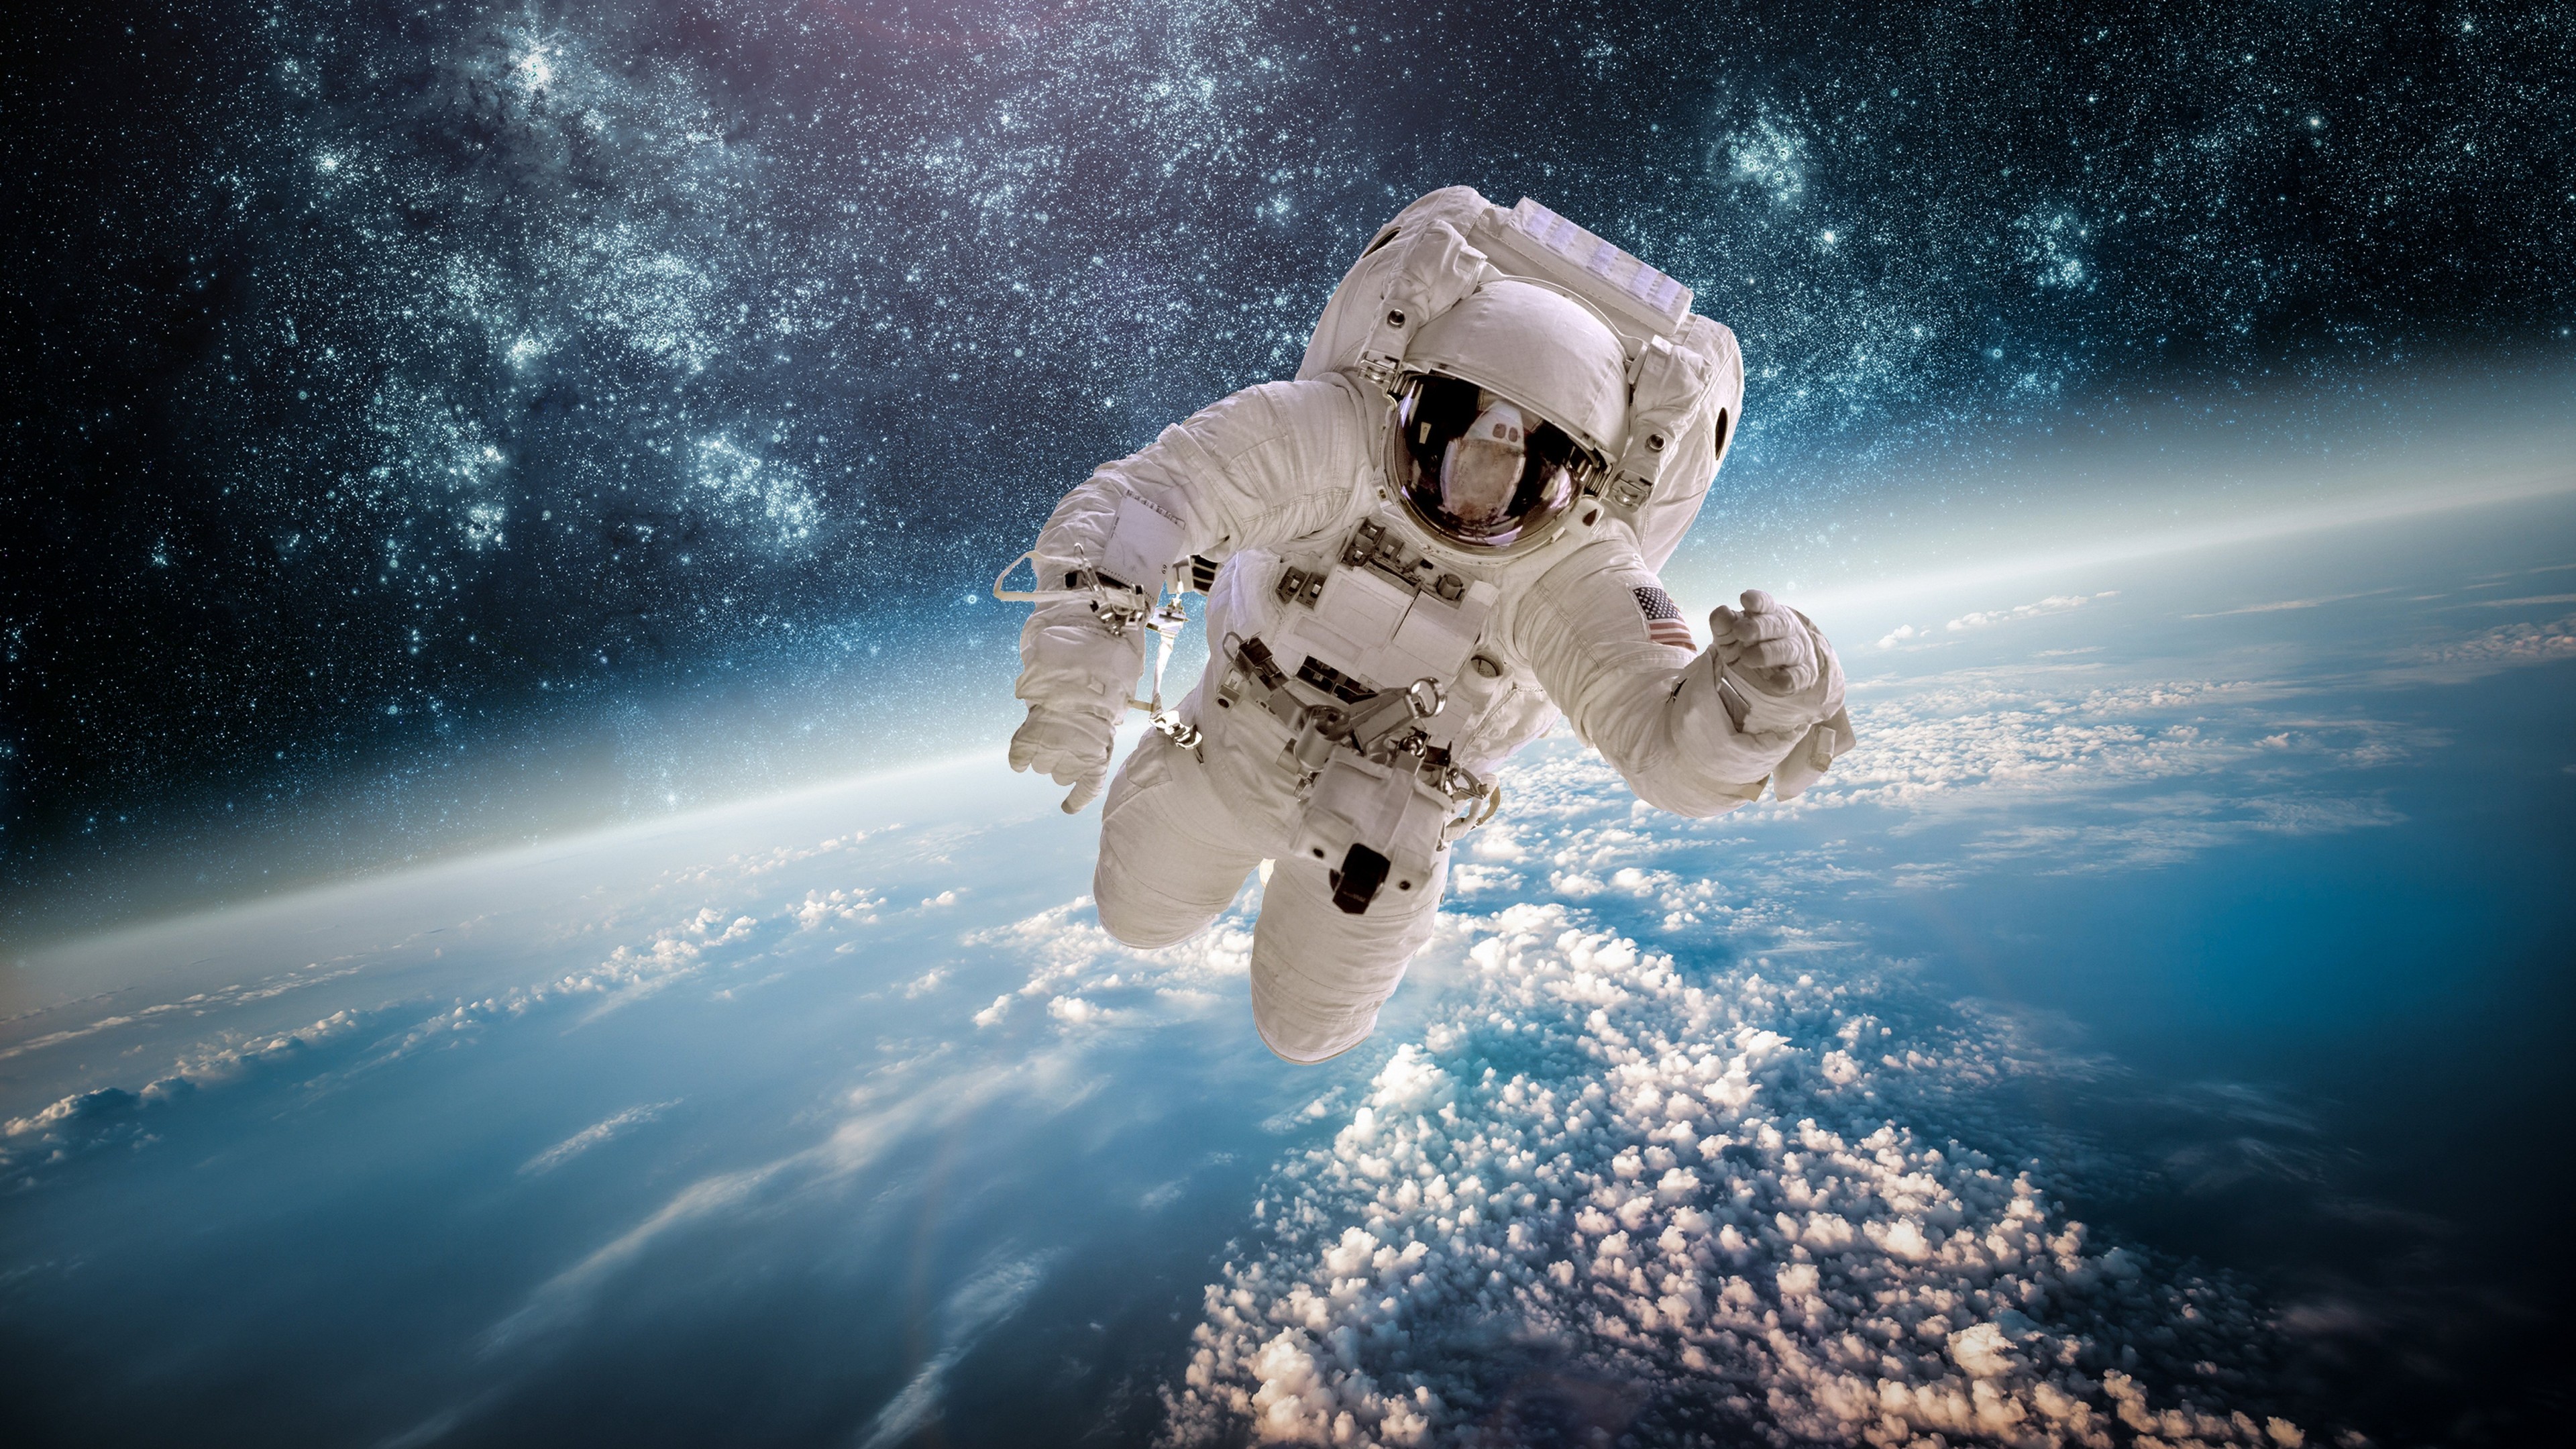 astronaut 1080P, 2k, 4k Full HD Wallpaper, Background Free Download